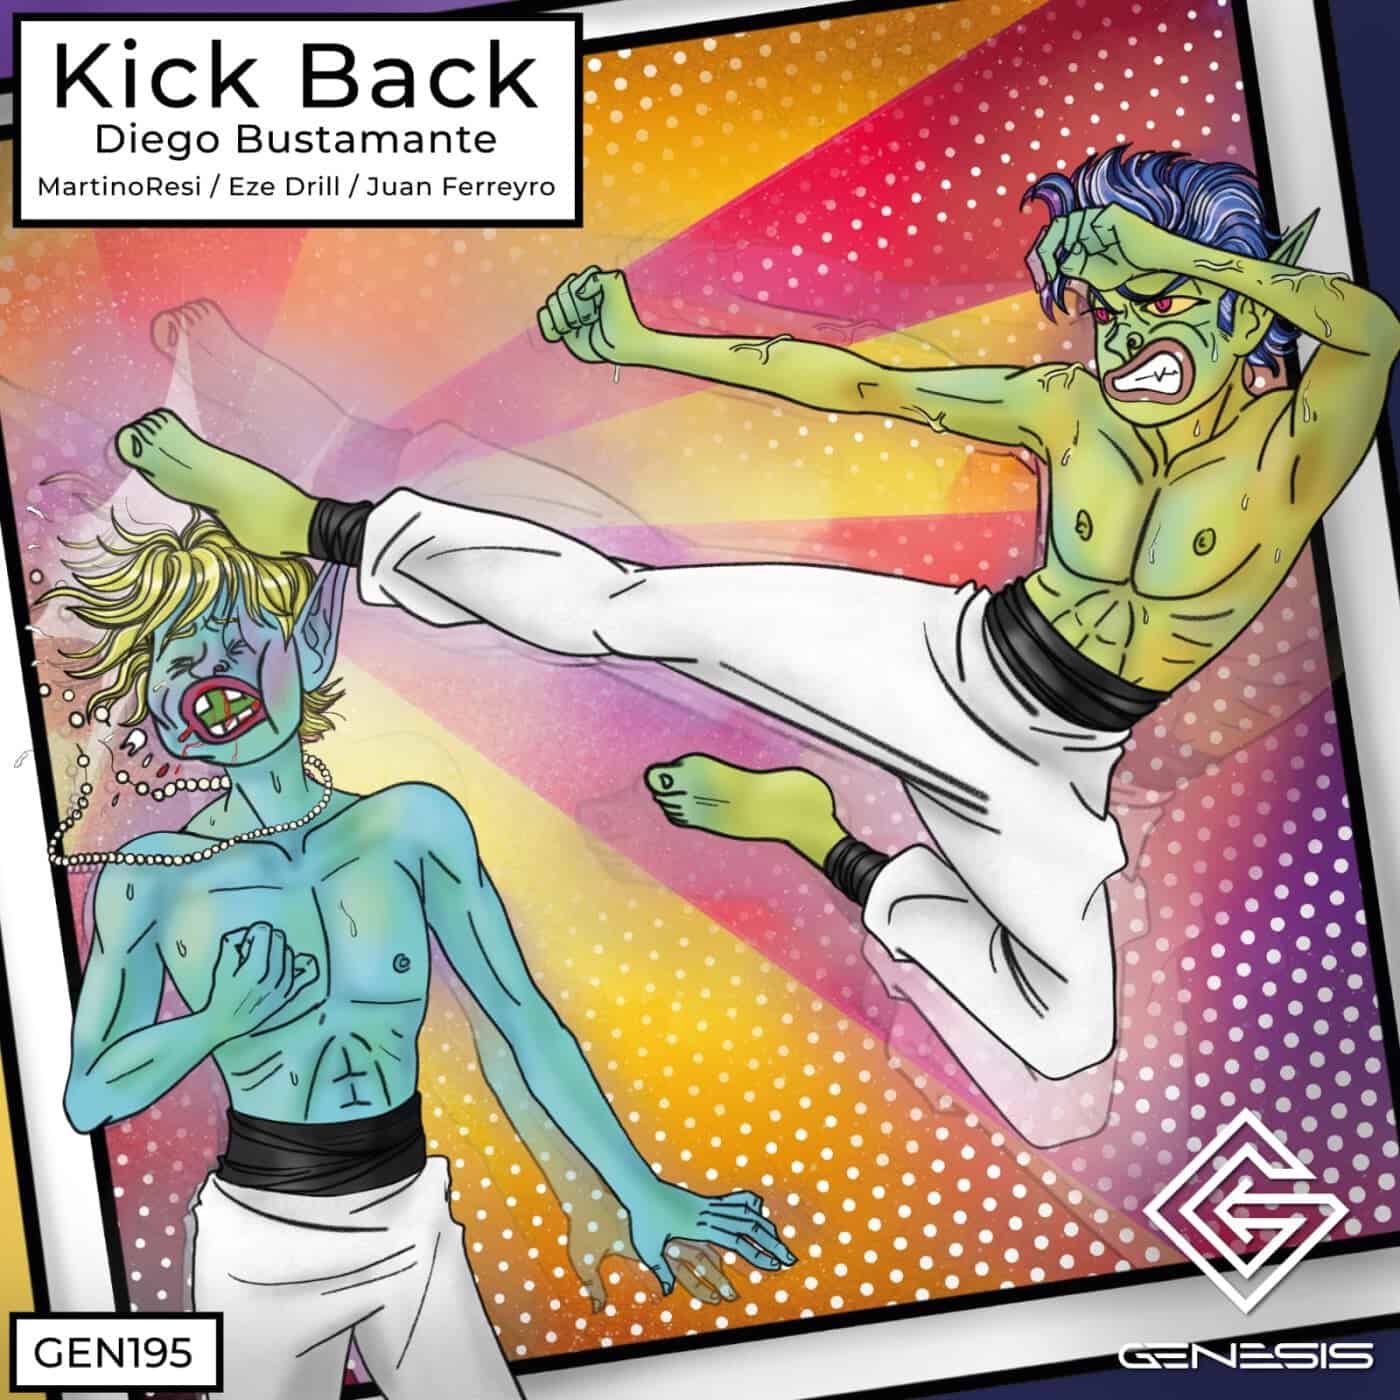 image cover: Diego Bustamante - Kick Back on Genesis BA